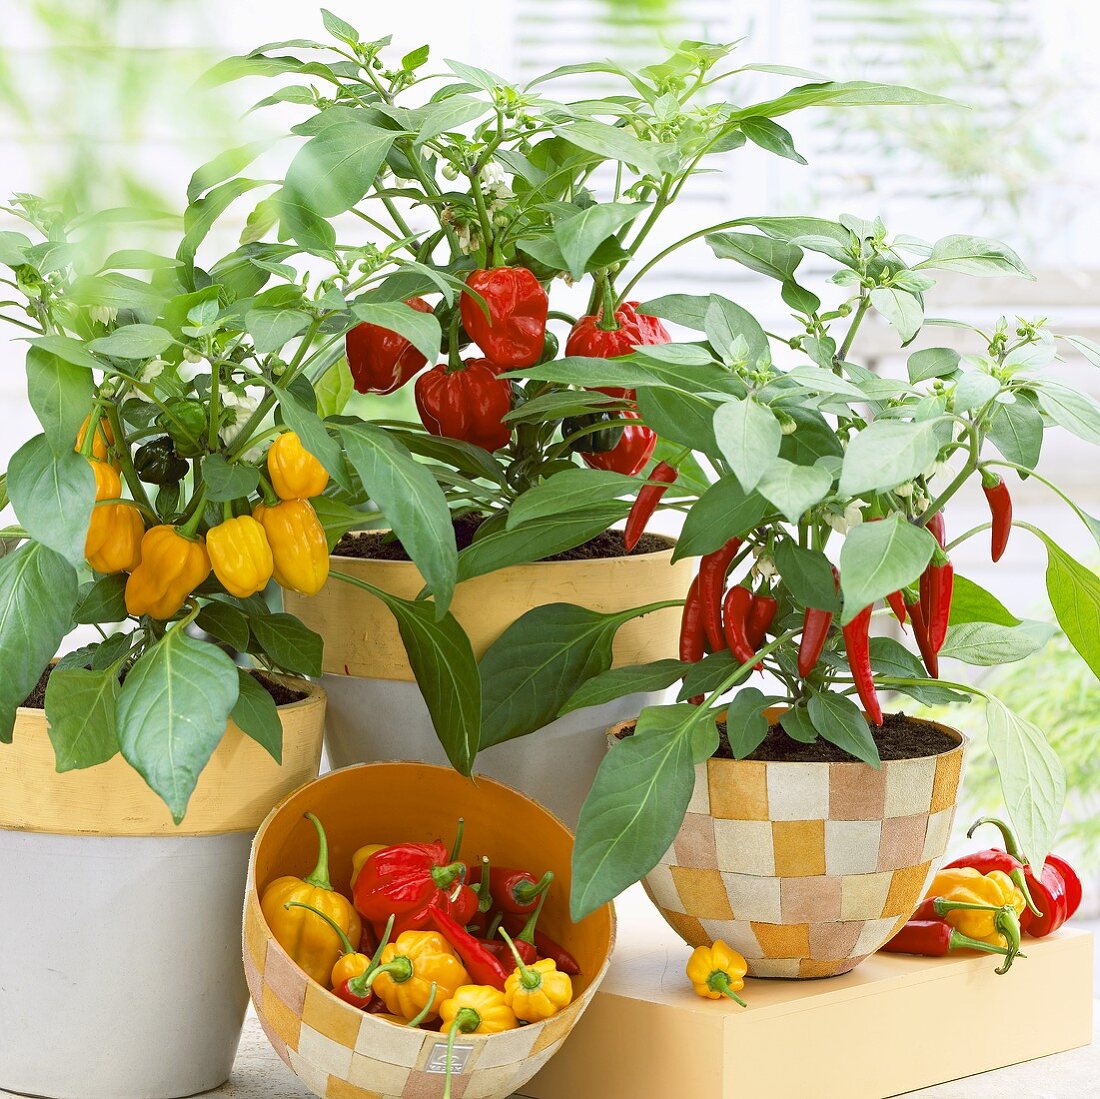 Chilli plants in pots